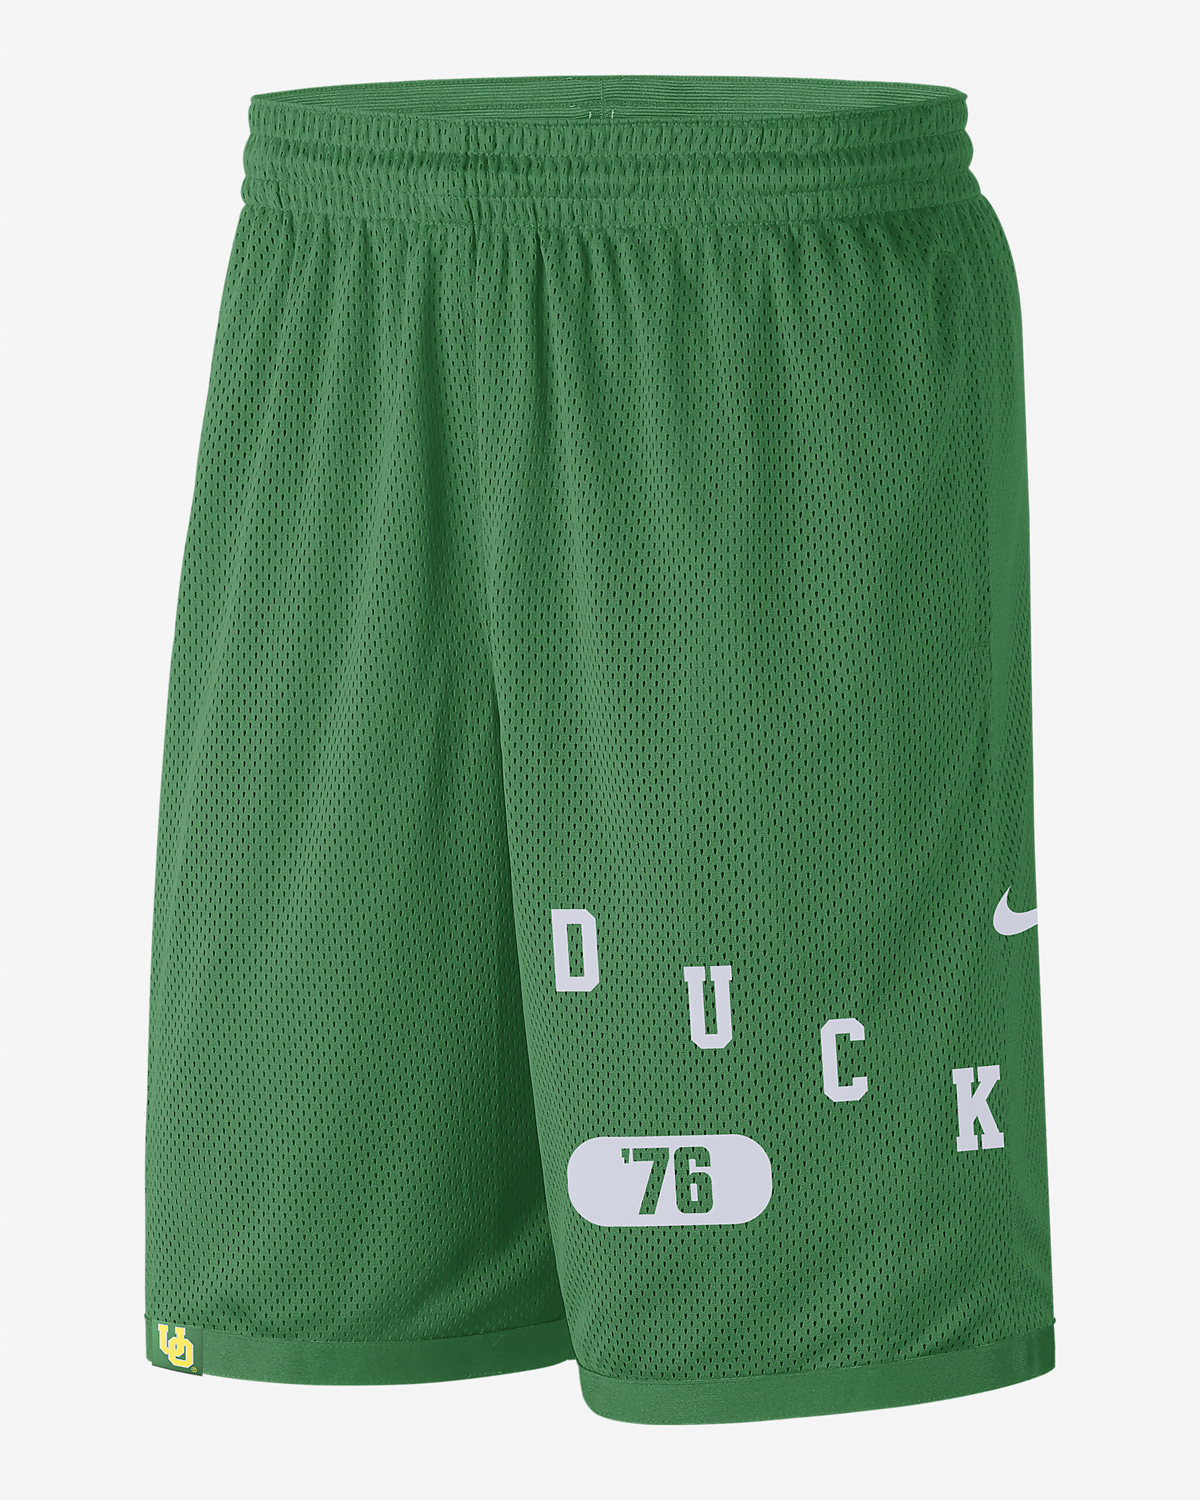 Nike-Dunk-Low-Oregon-Ducks-Shorts